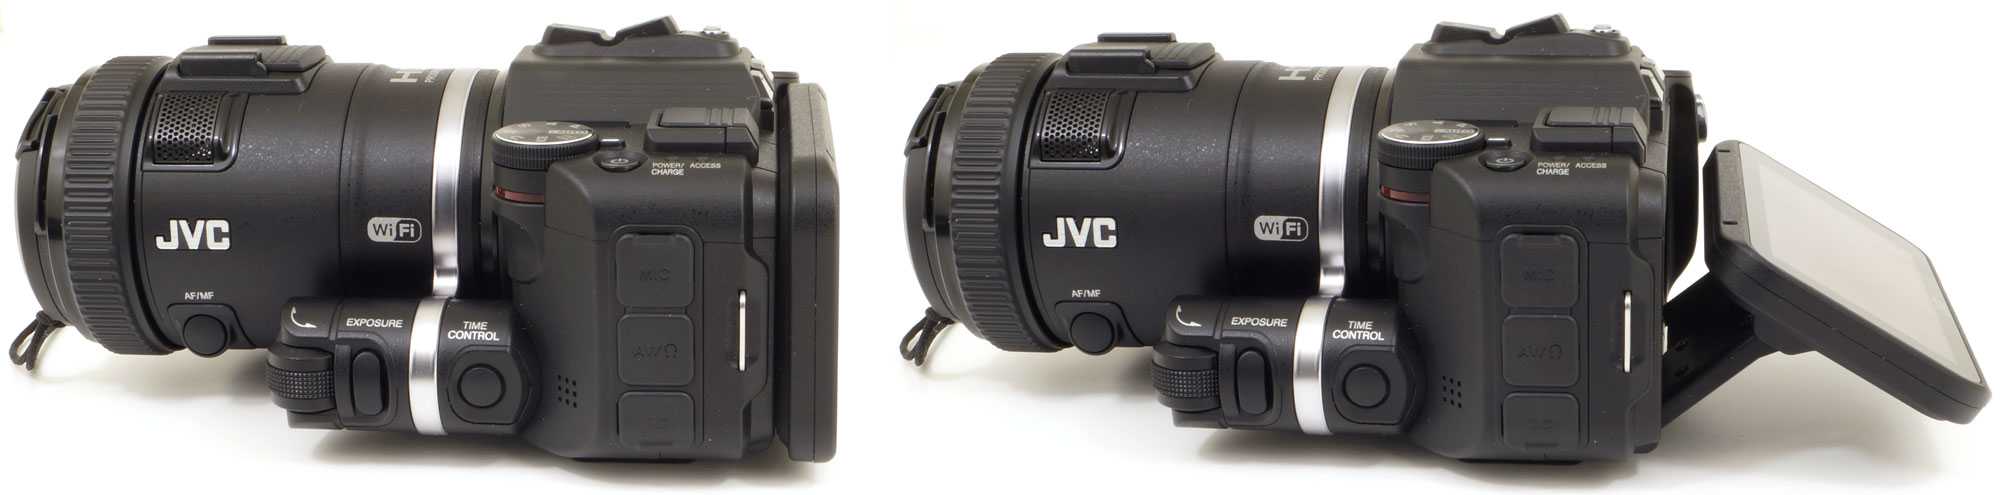 Jvc gc-px10